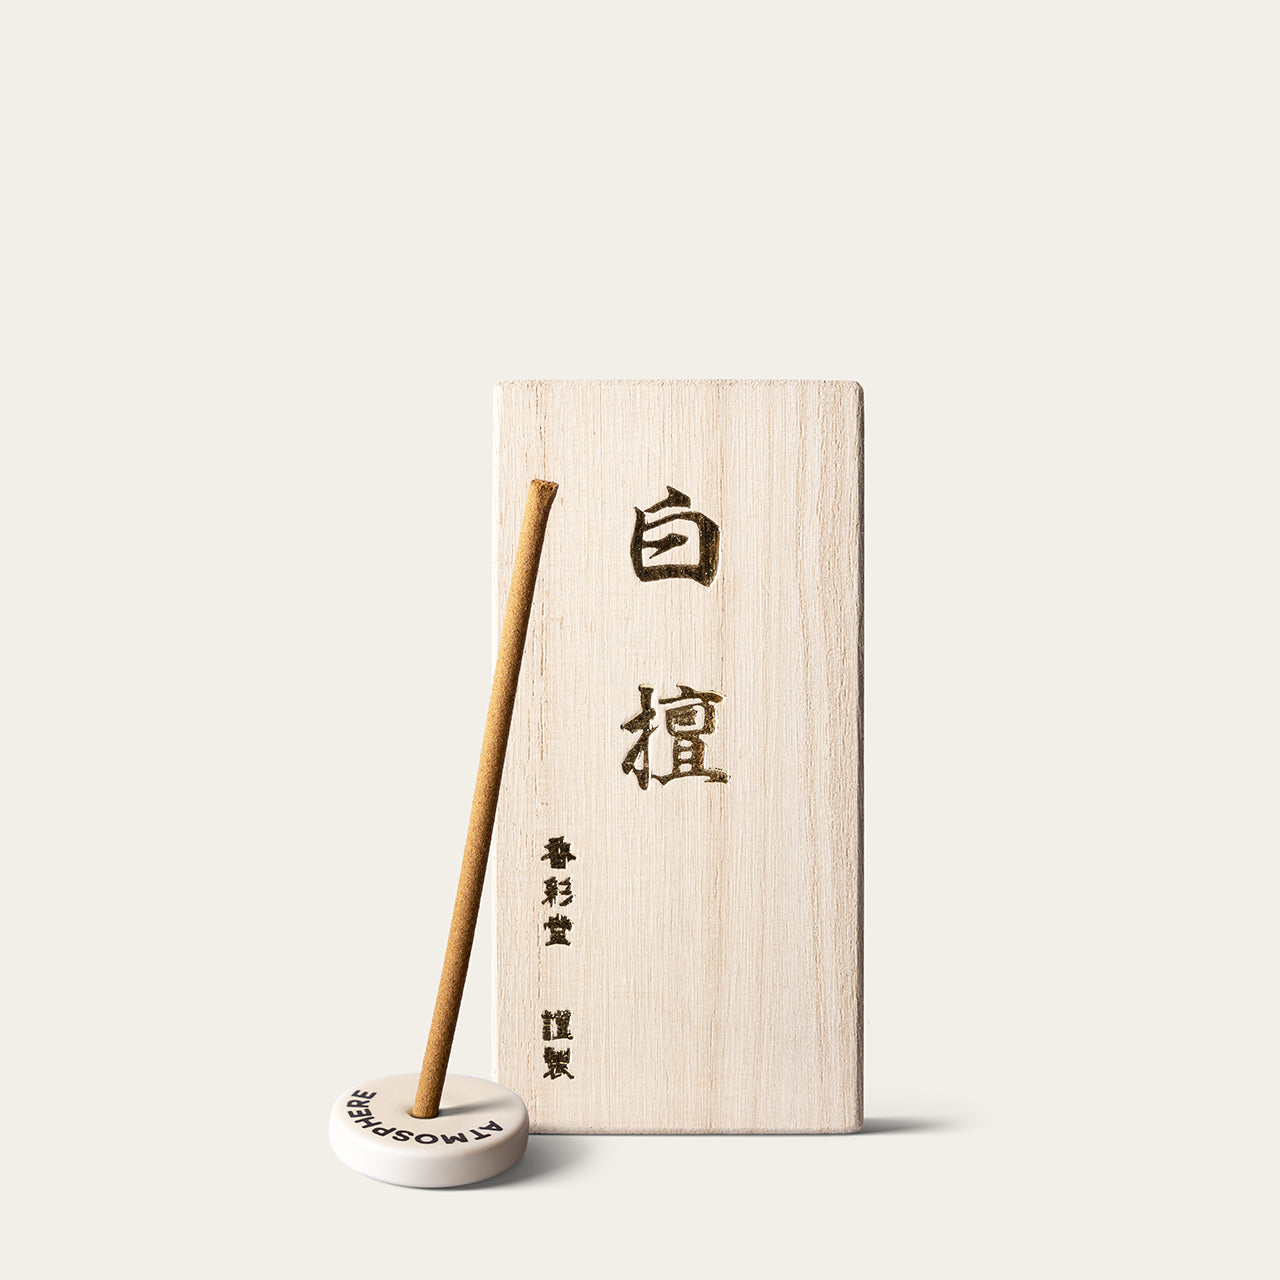 Kousaido Premium Sandalwood Supreme Japanese incense sticks (40 sticks) with Atmosphere ceramic incense holder